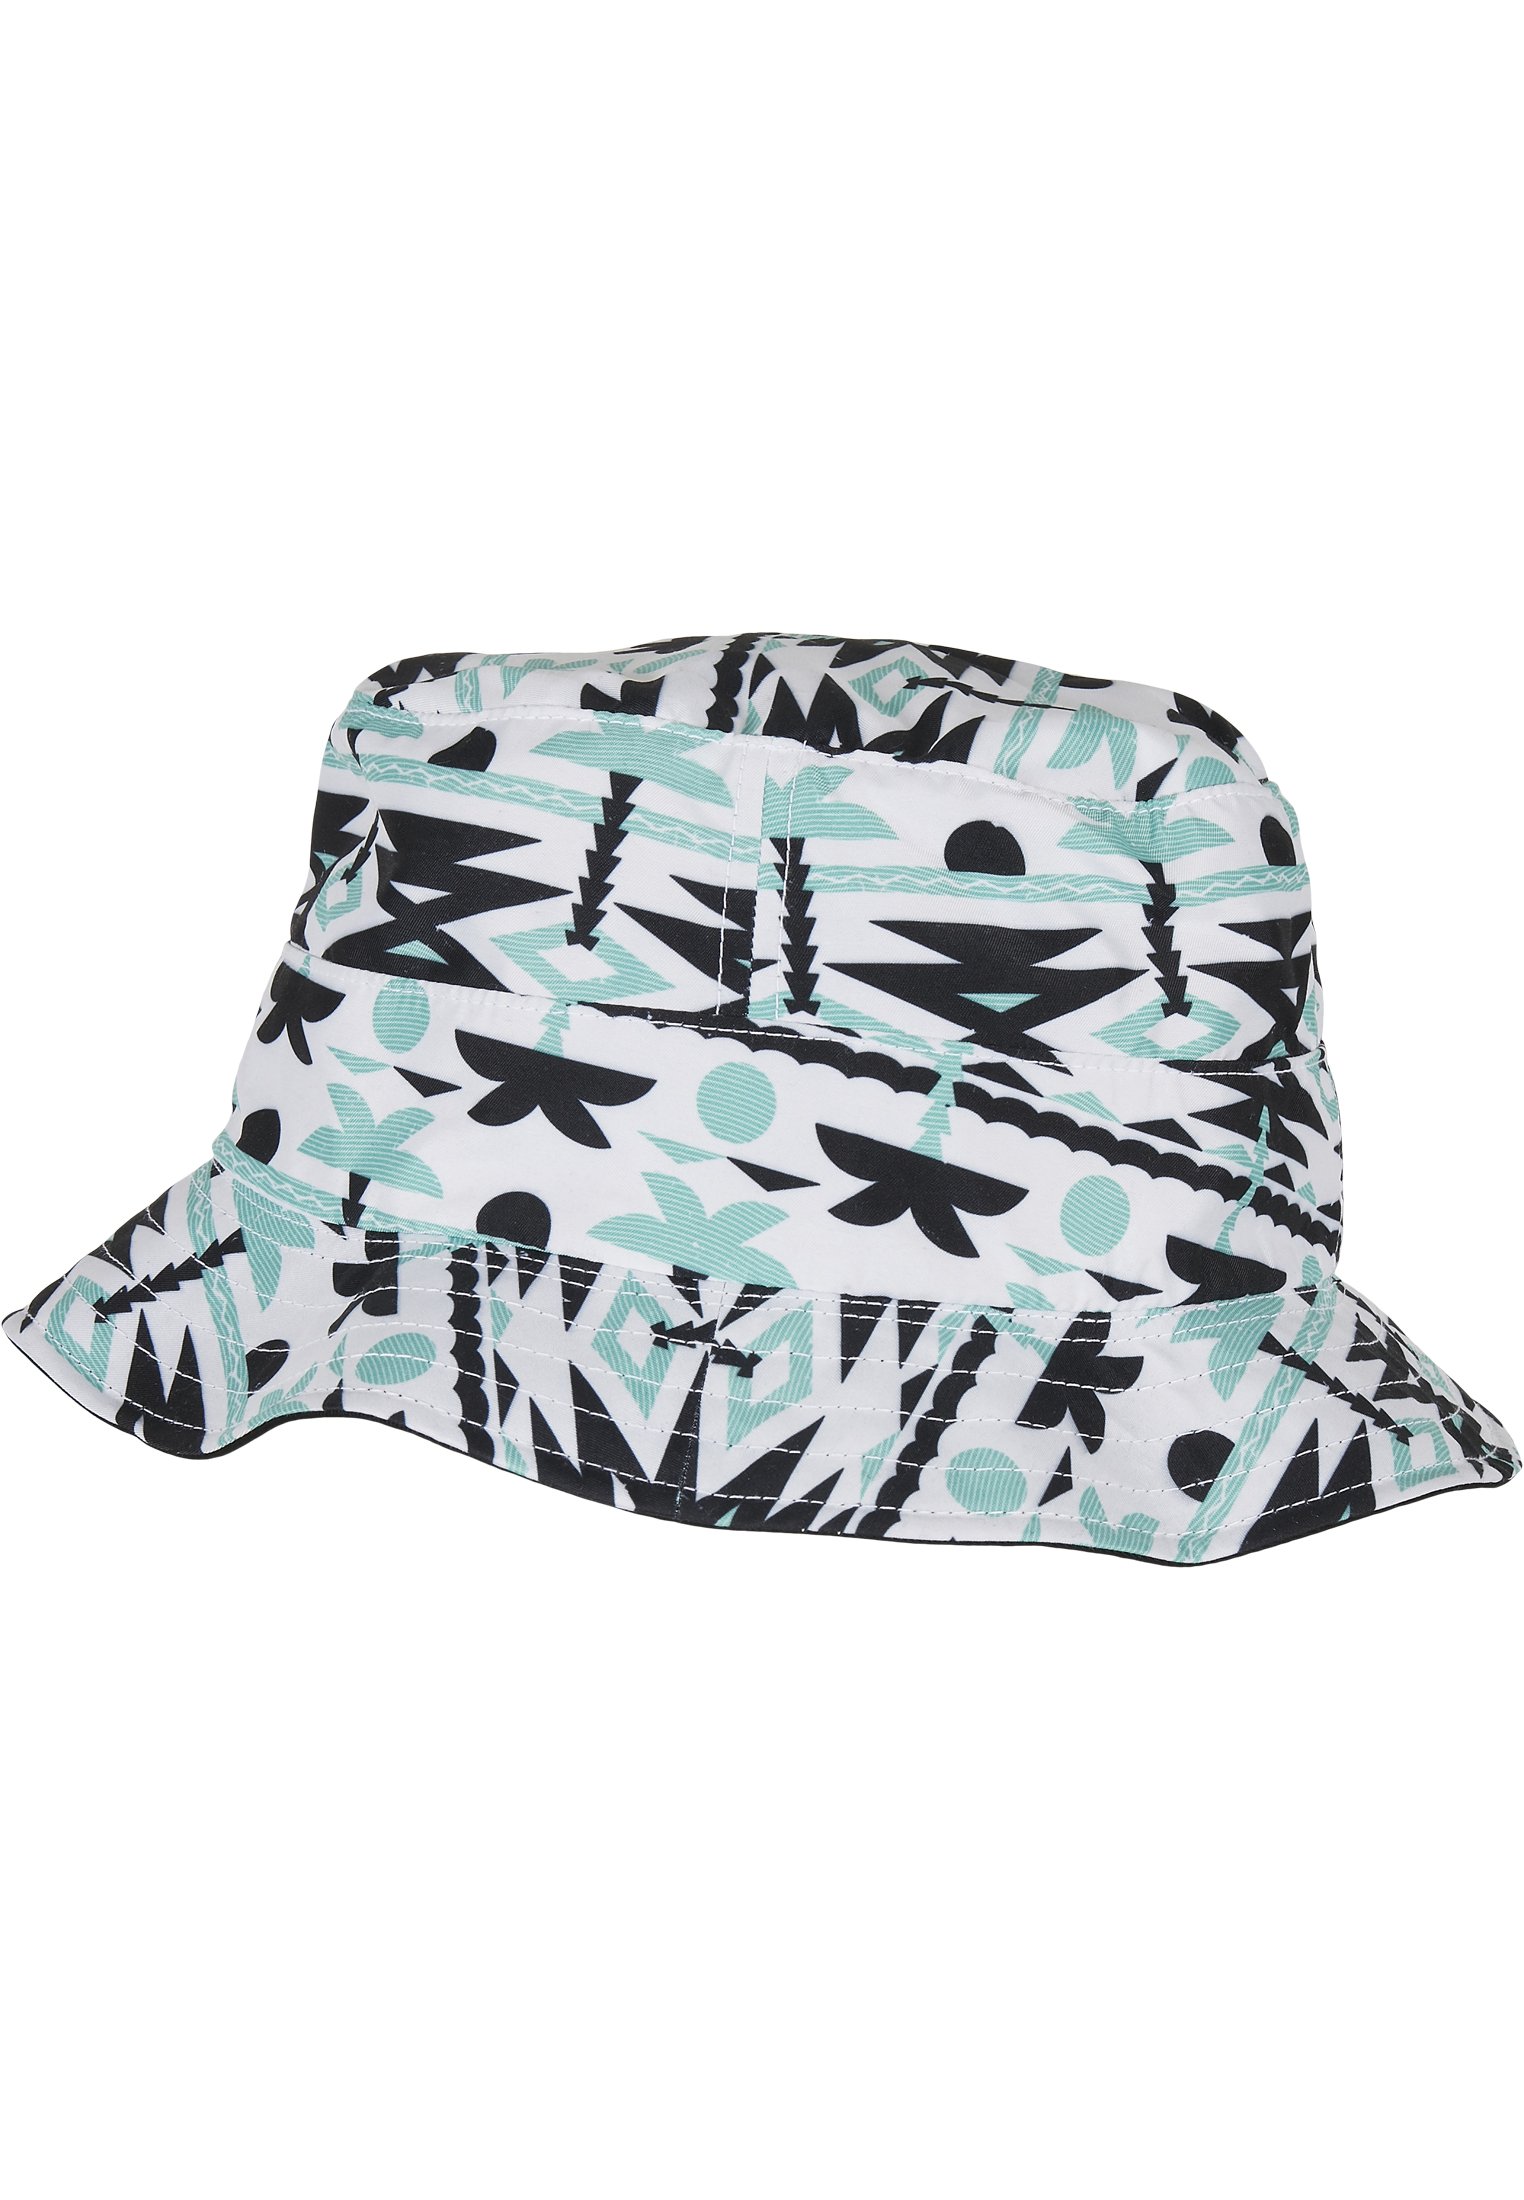 C&S WL Aztec Summer Reversible Bucket Hat black/mc one size